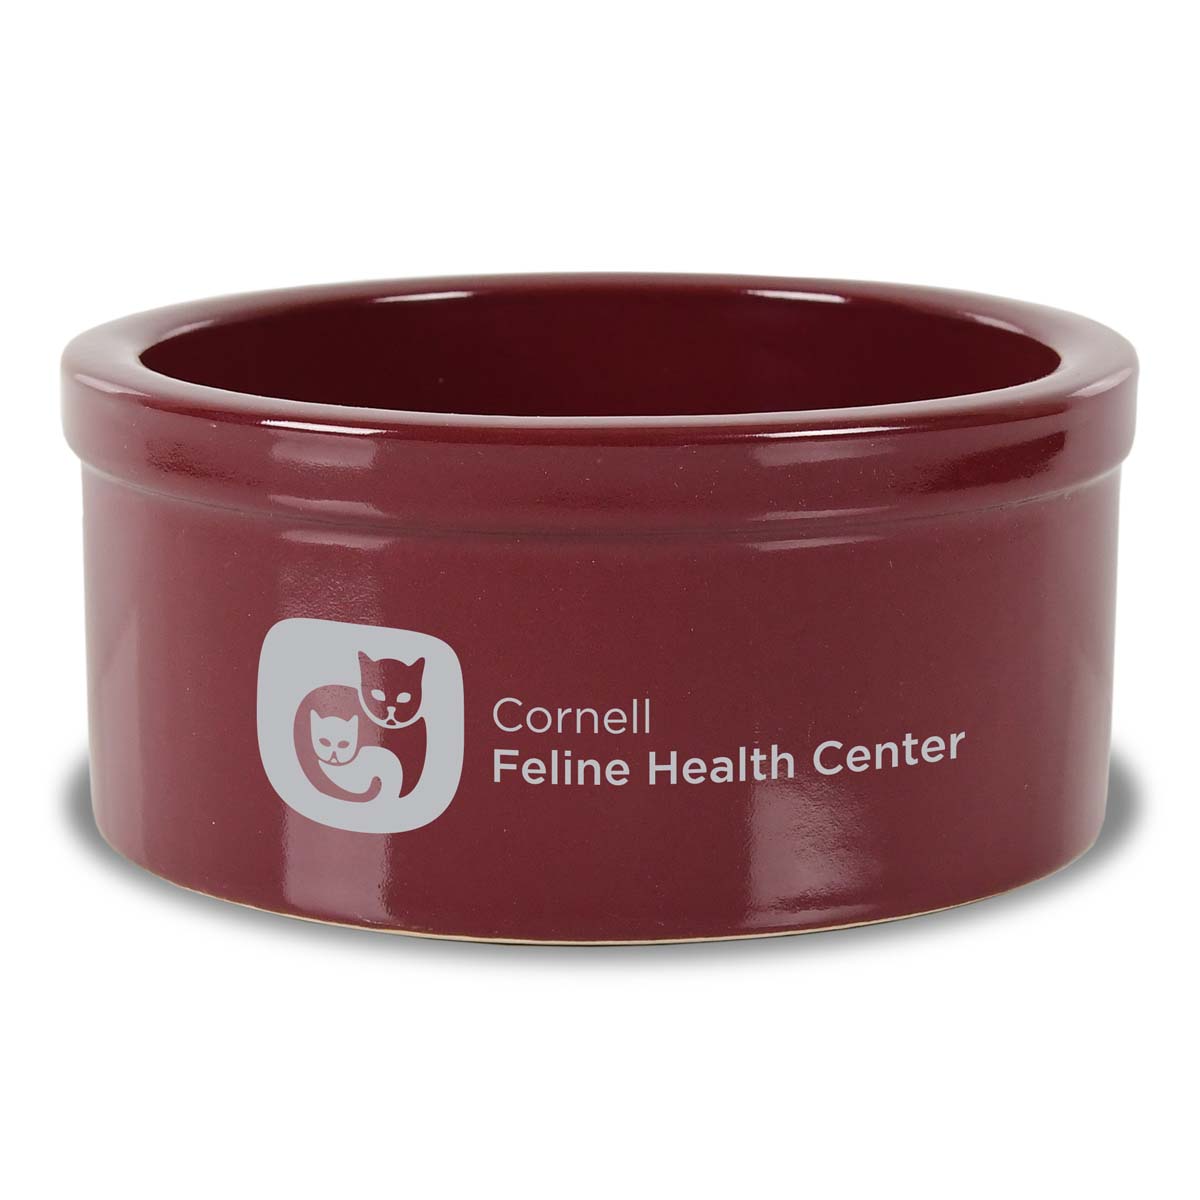 Cornell Feline Health Center Stonew